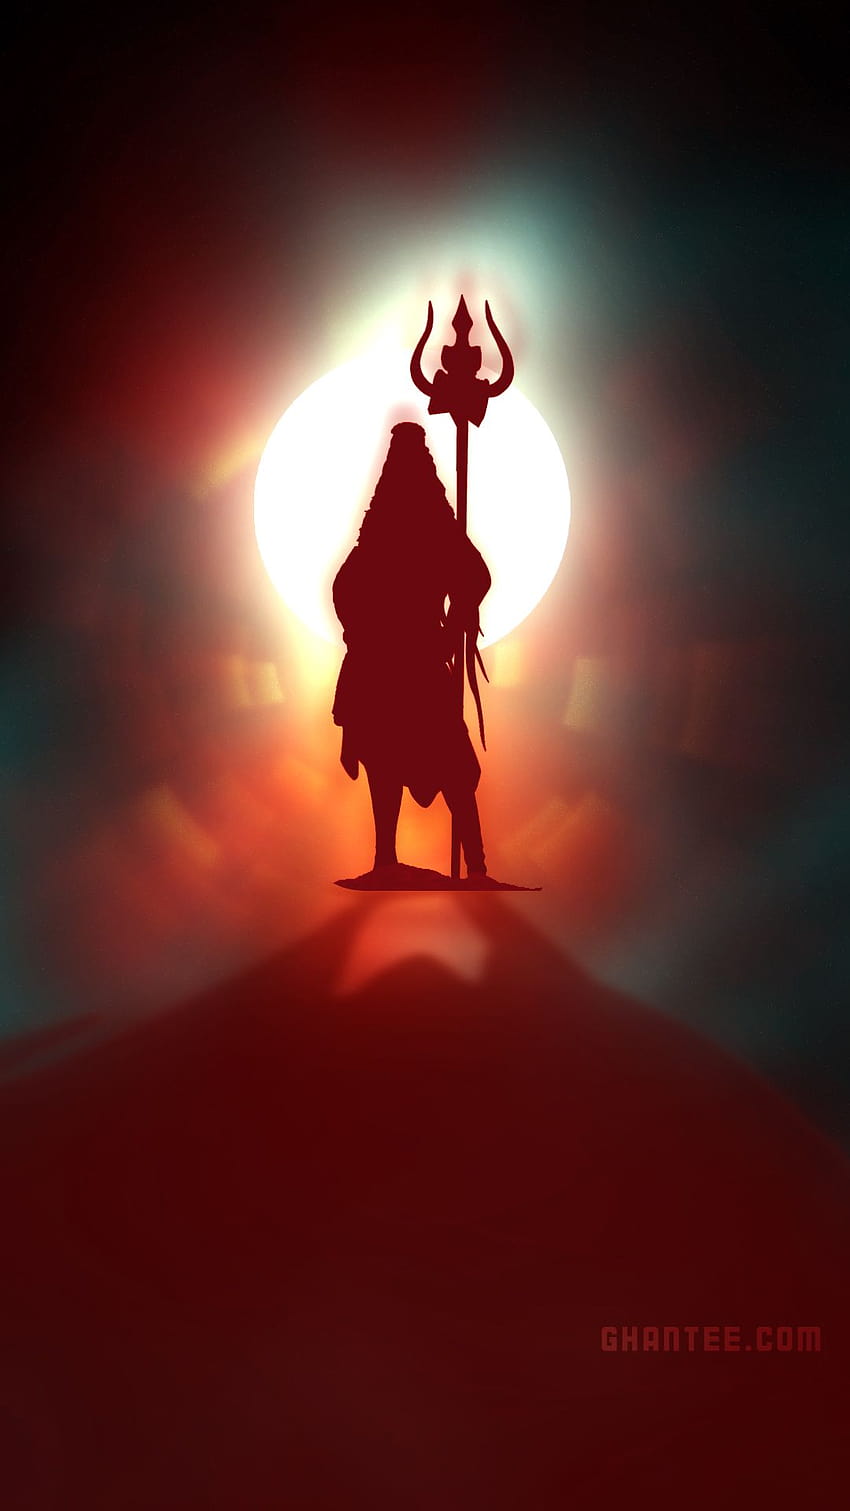 Beautiful Image Of Lord Shiva